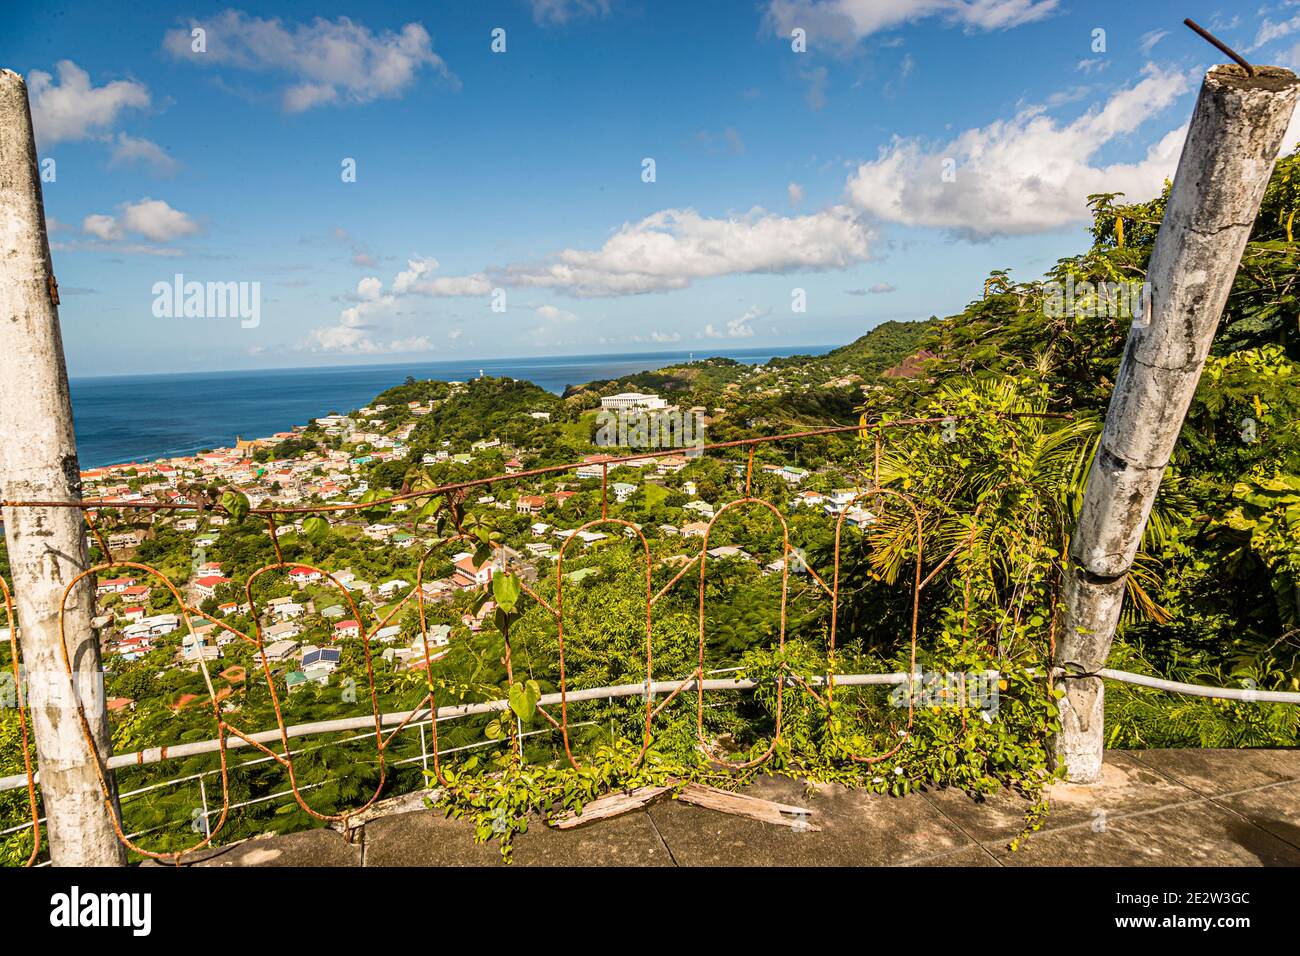 Saint George's, capital city of Grenada Stock Photo